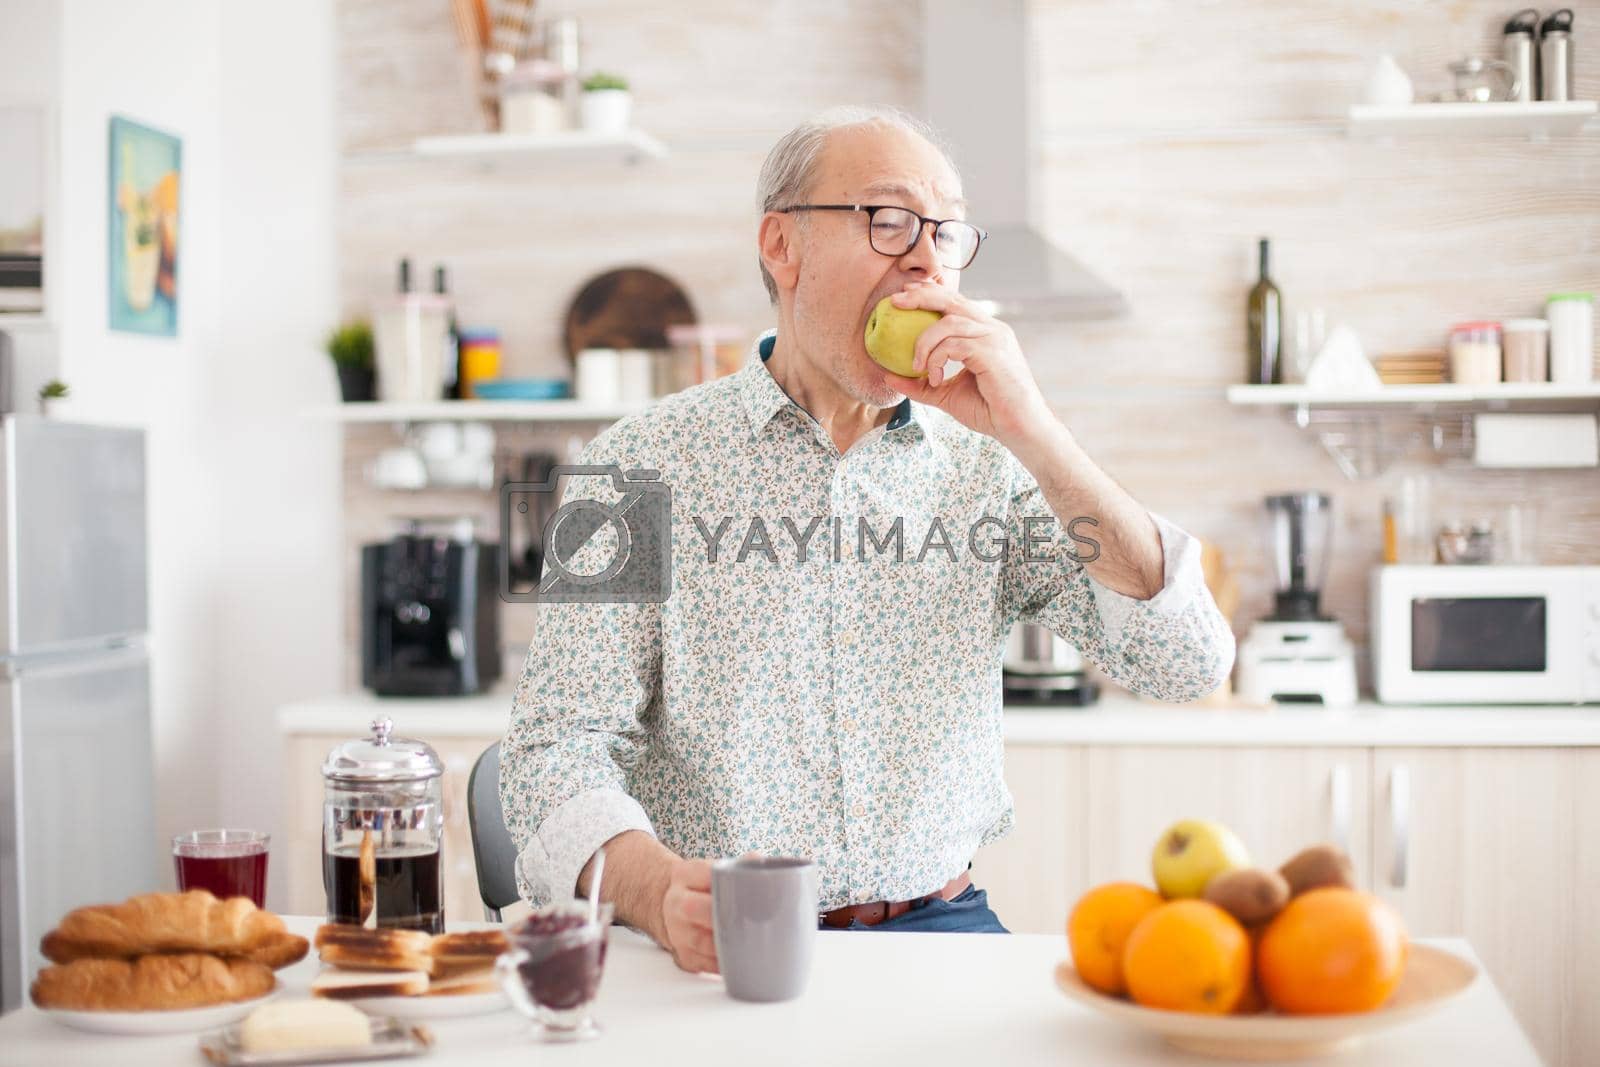 Royalty free image of Elderly man bitting green apple by DCStudio